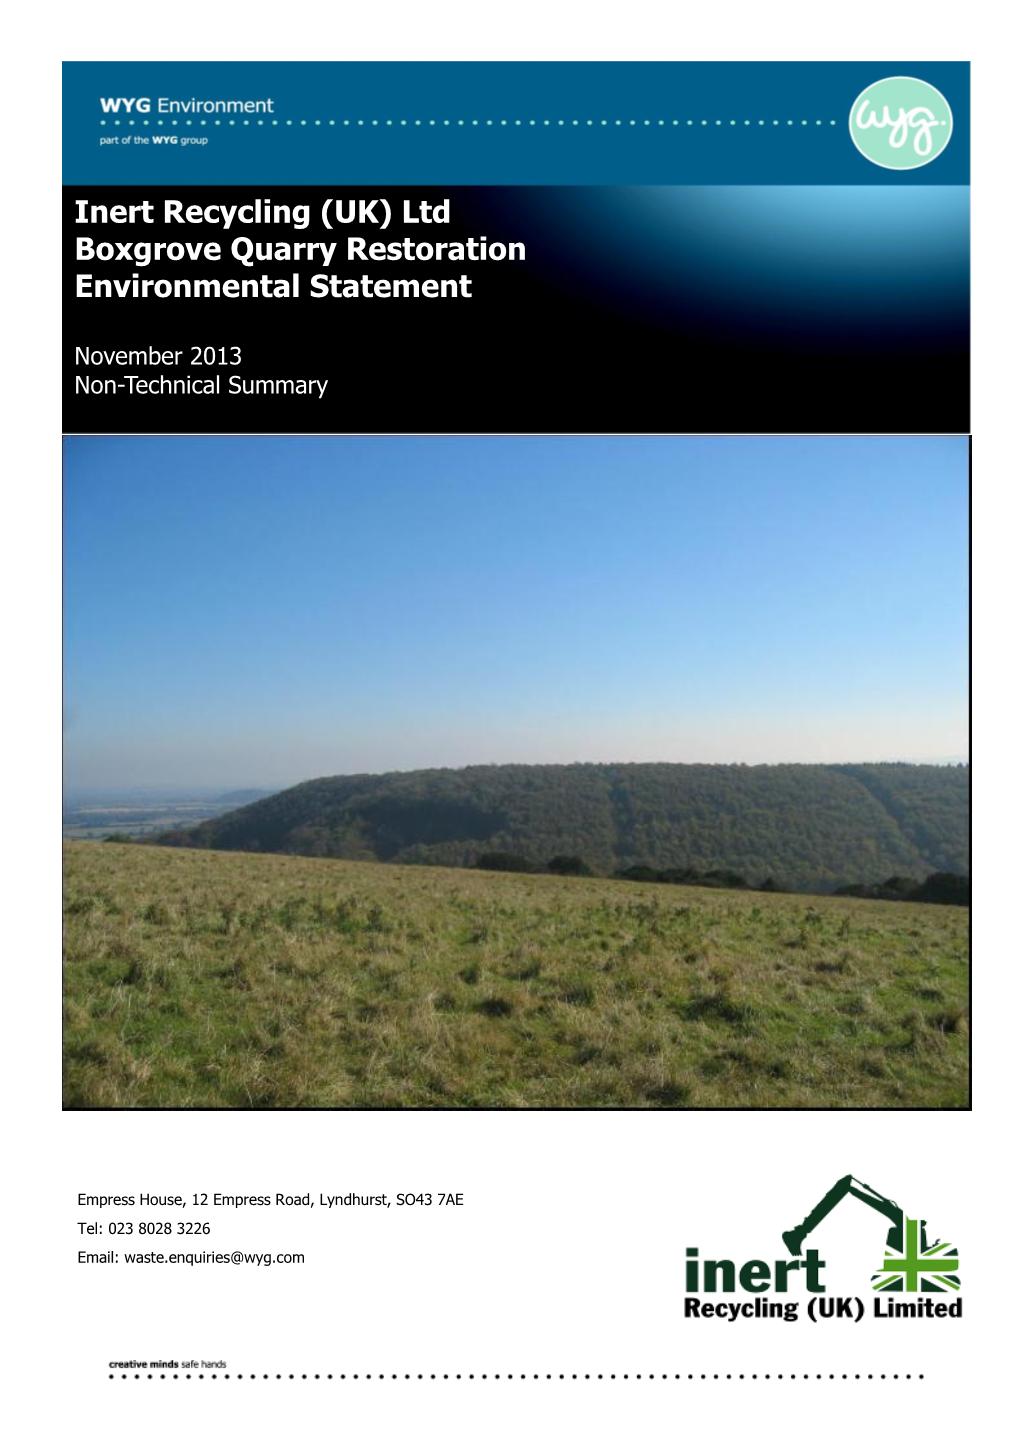 Inert Recycling (UK) Ltd Boxgrove Quarry Restoration Environmental Statement